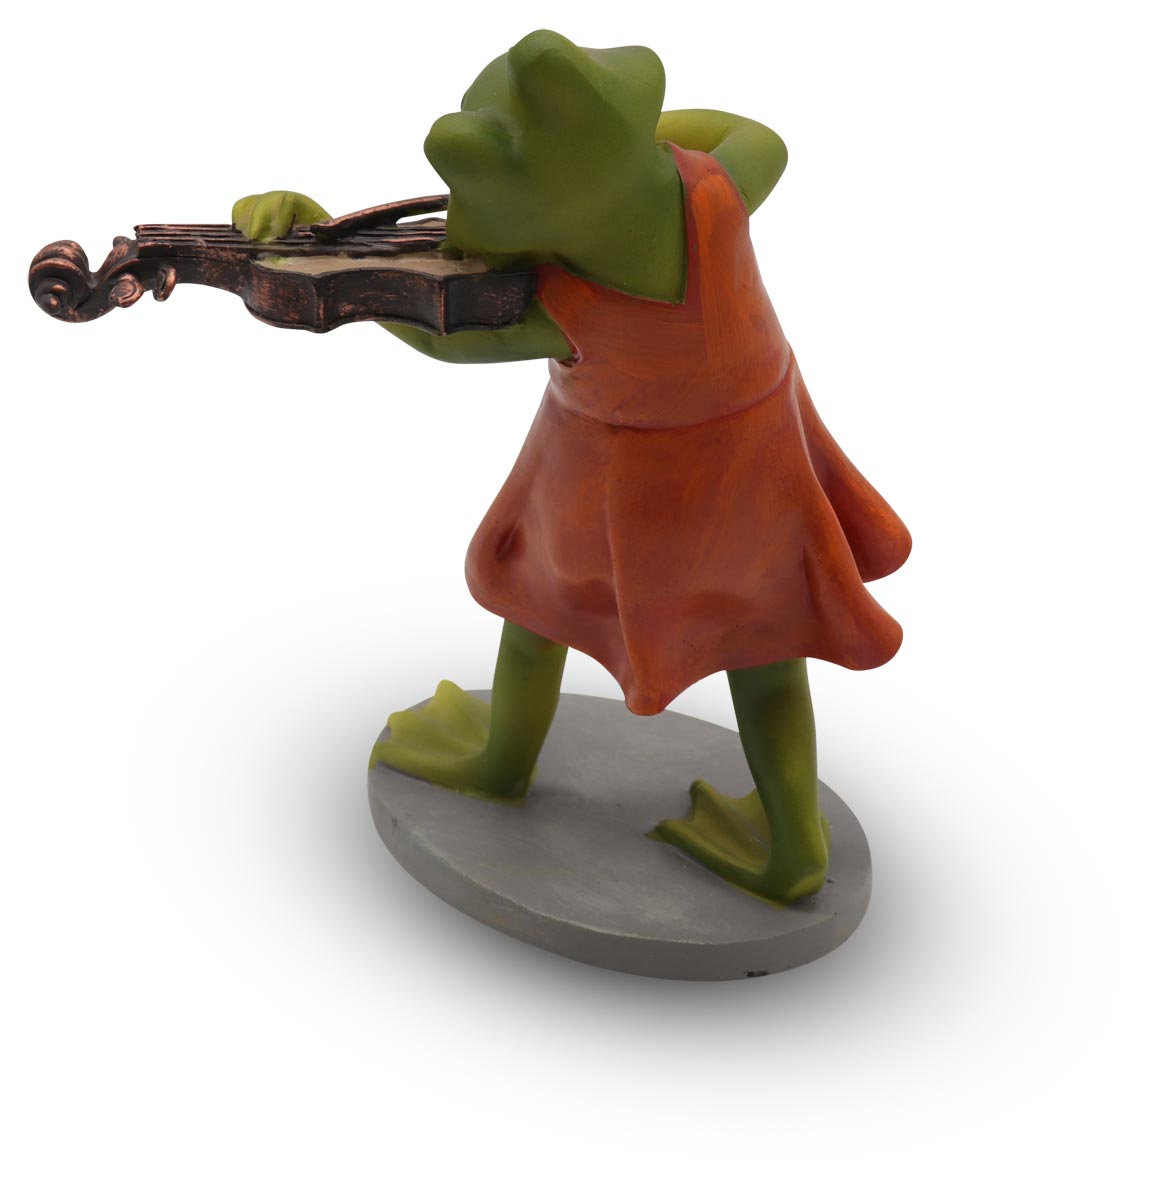 Frog Gudrun as violinist, 